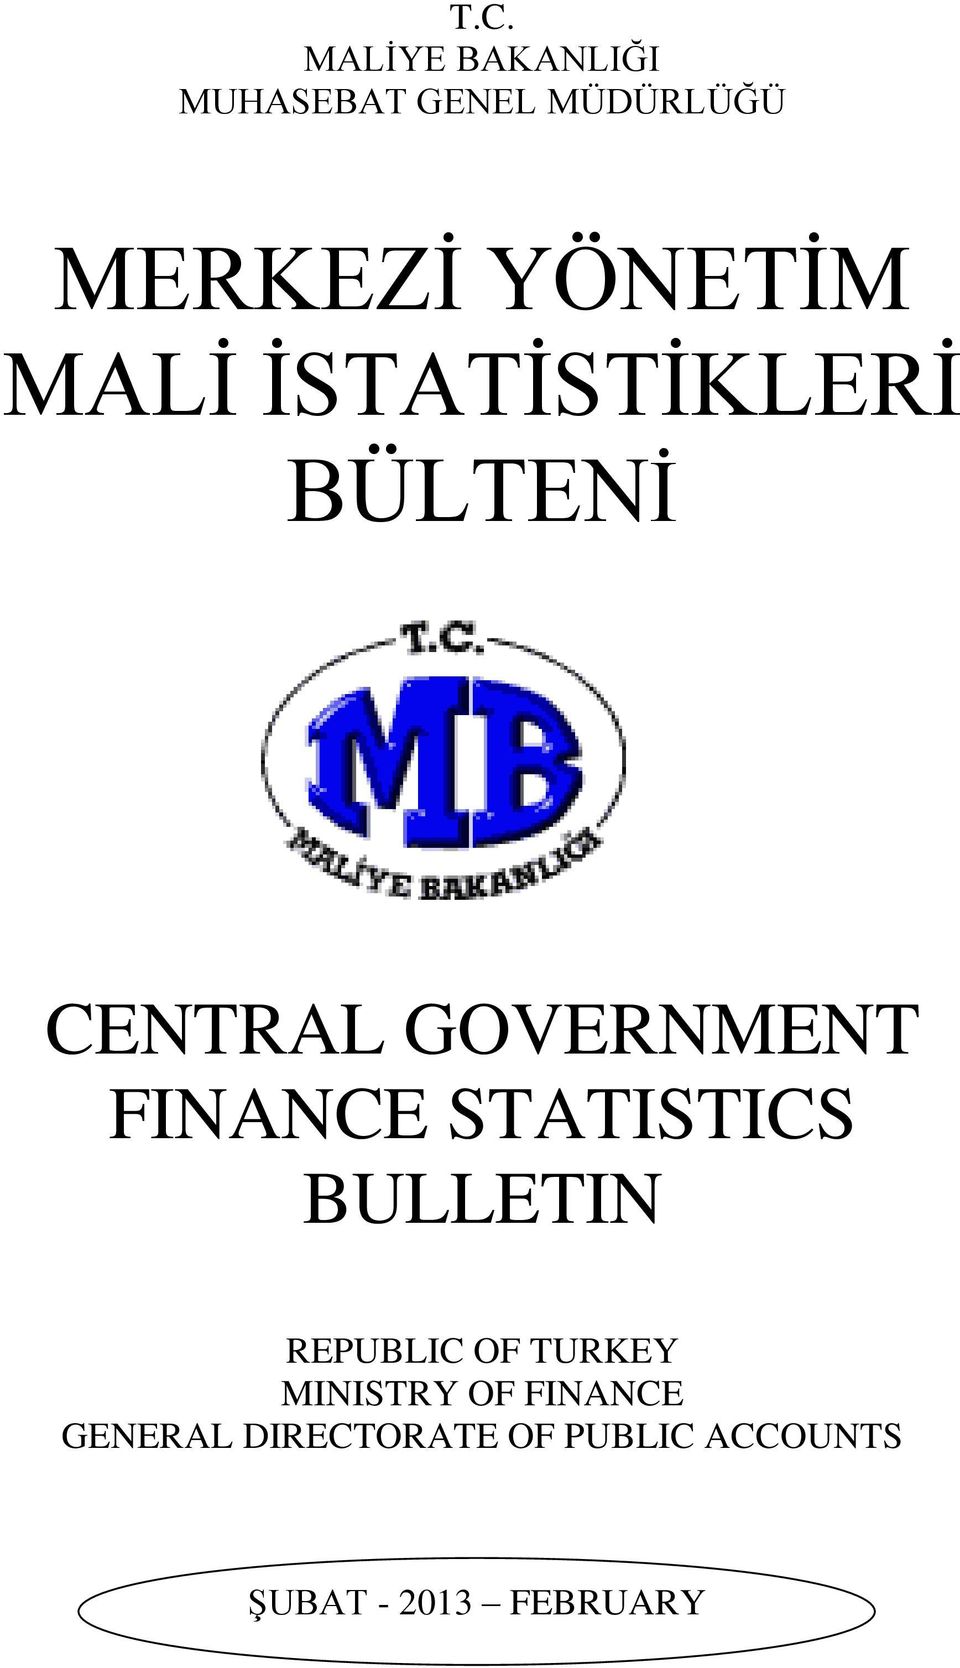 FINANCE STATISTICS BULLETIN REPUBLIC OF TURKEY MINISTRY OF